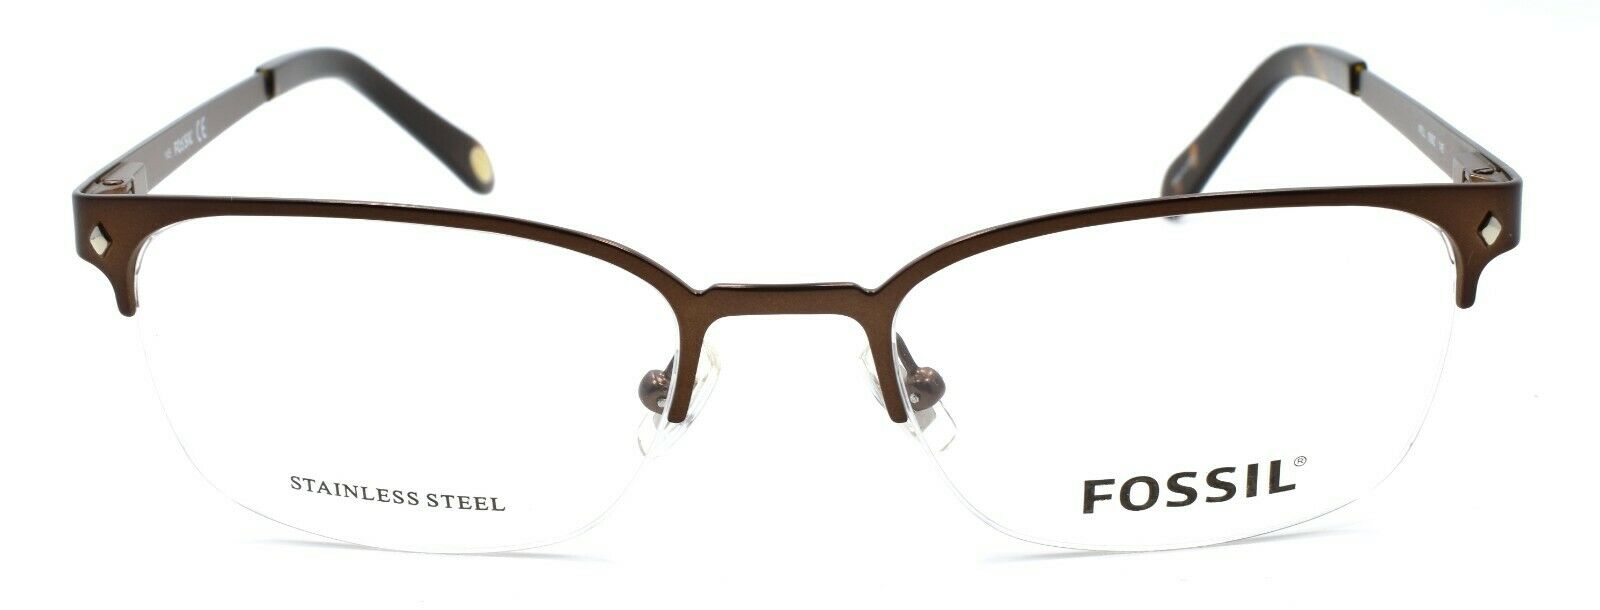 2-Fossil Will 05BZ Men's Glasses Frames Half-rim 52-19-145 Matte Chocolate Brown-716737556863-IKSpecs